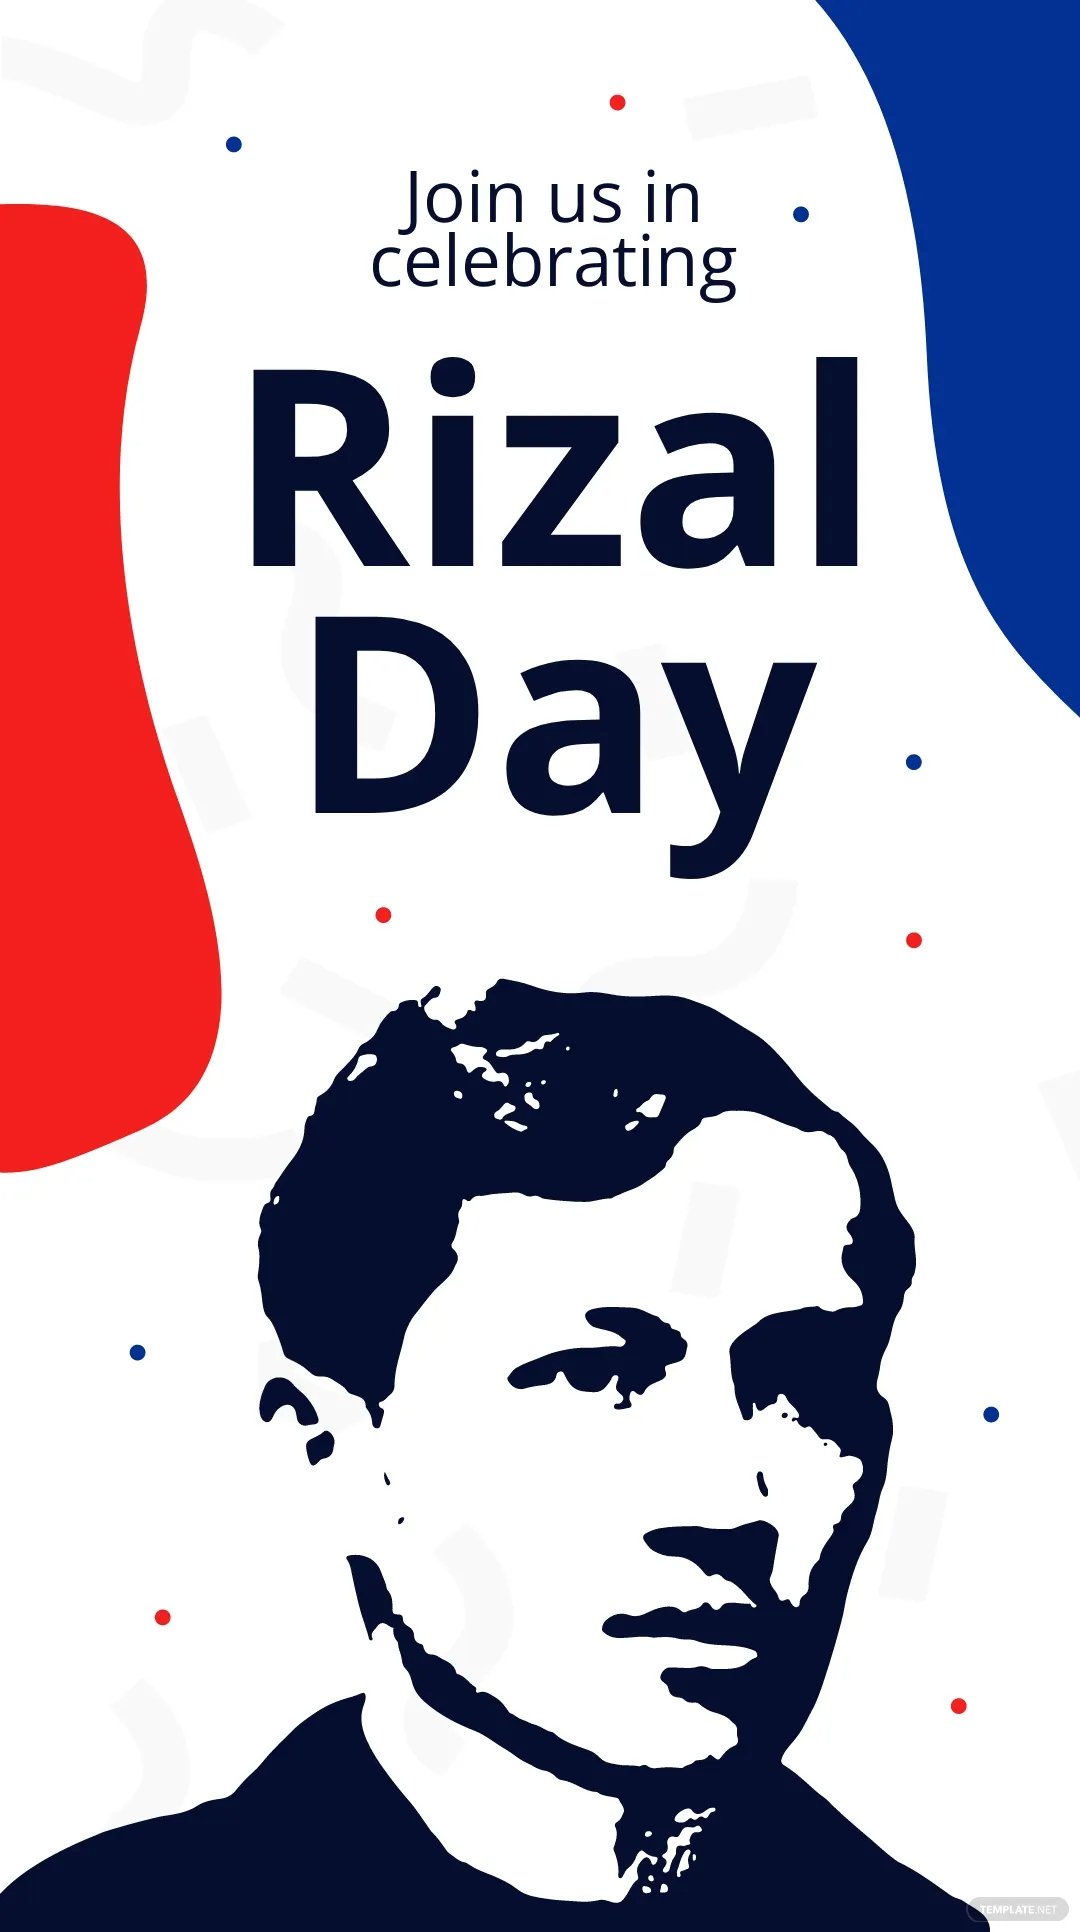 rizal-day-celebration-instagram-story